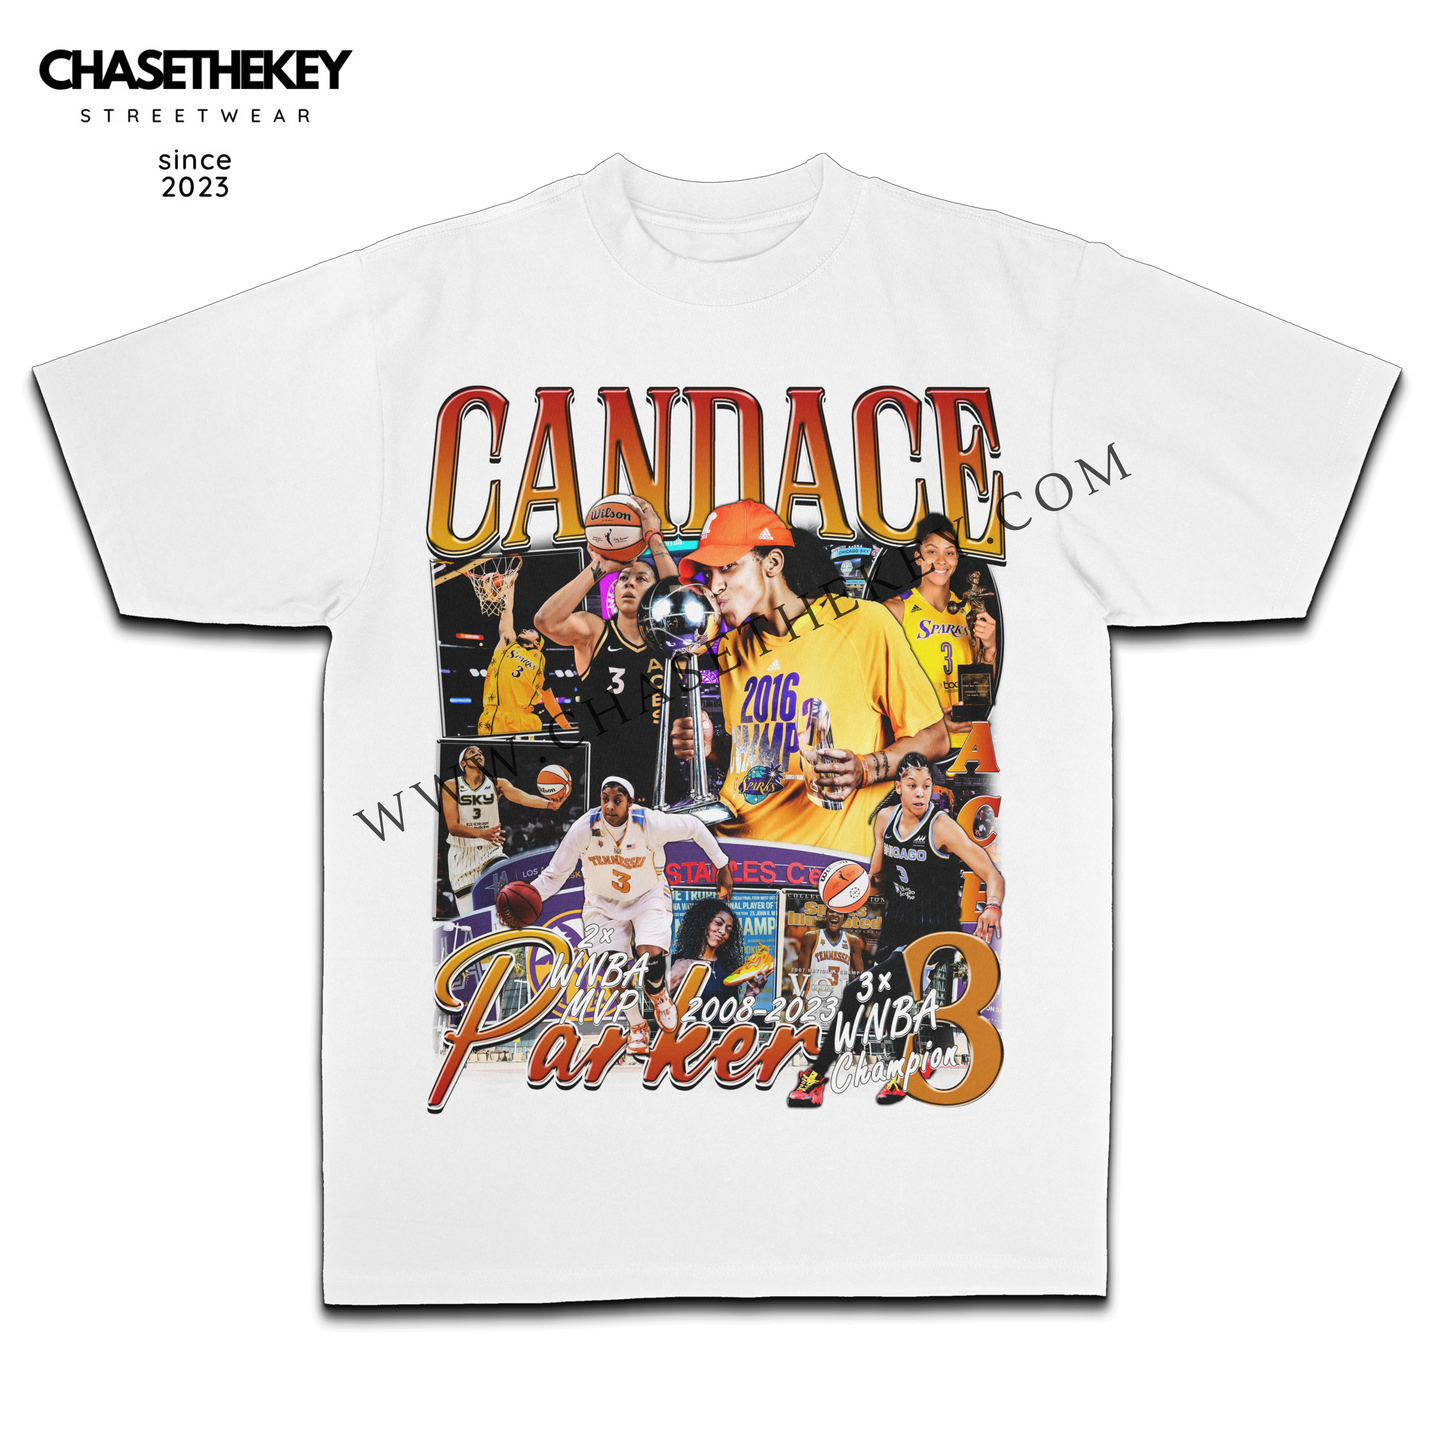 Candace Parker Tribute T-Shirt